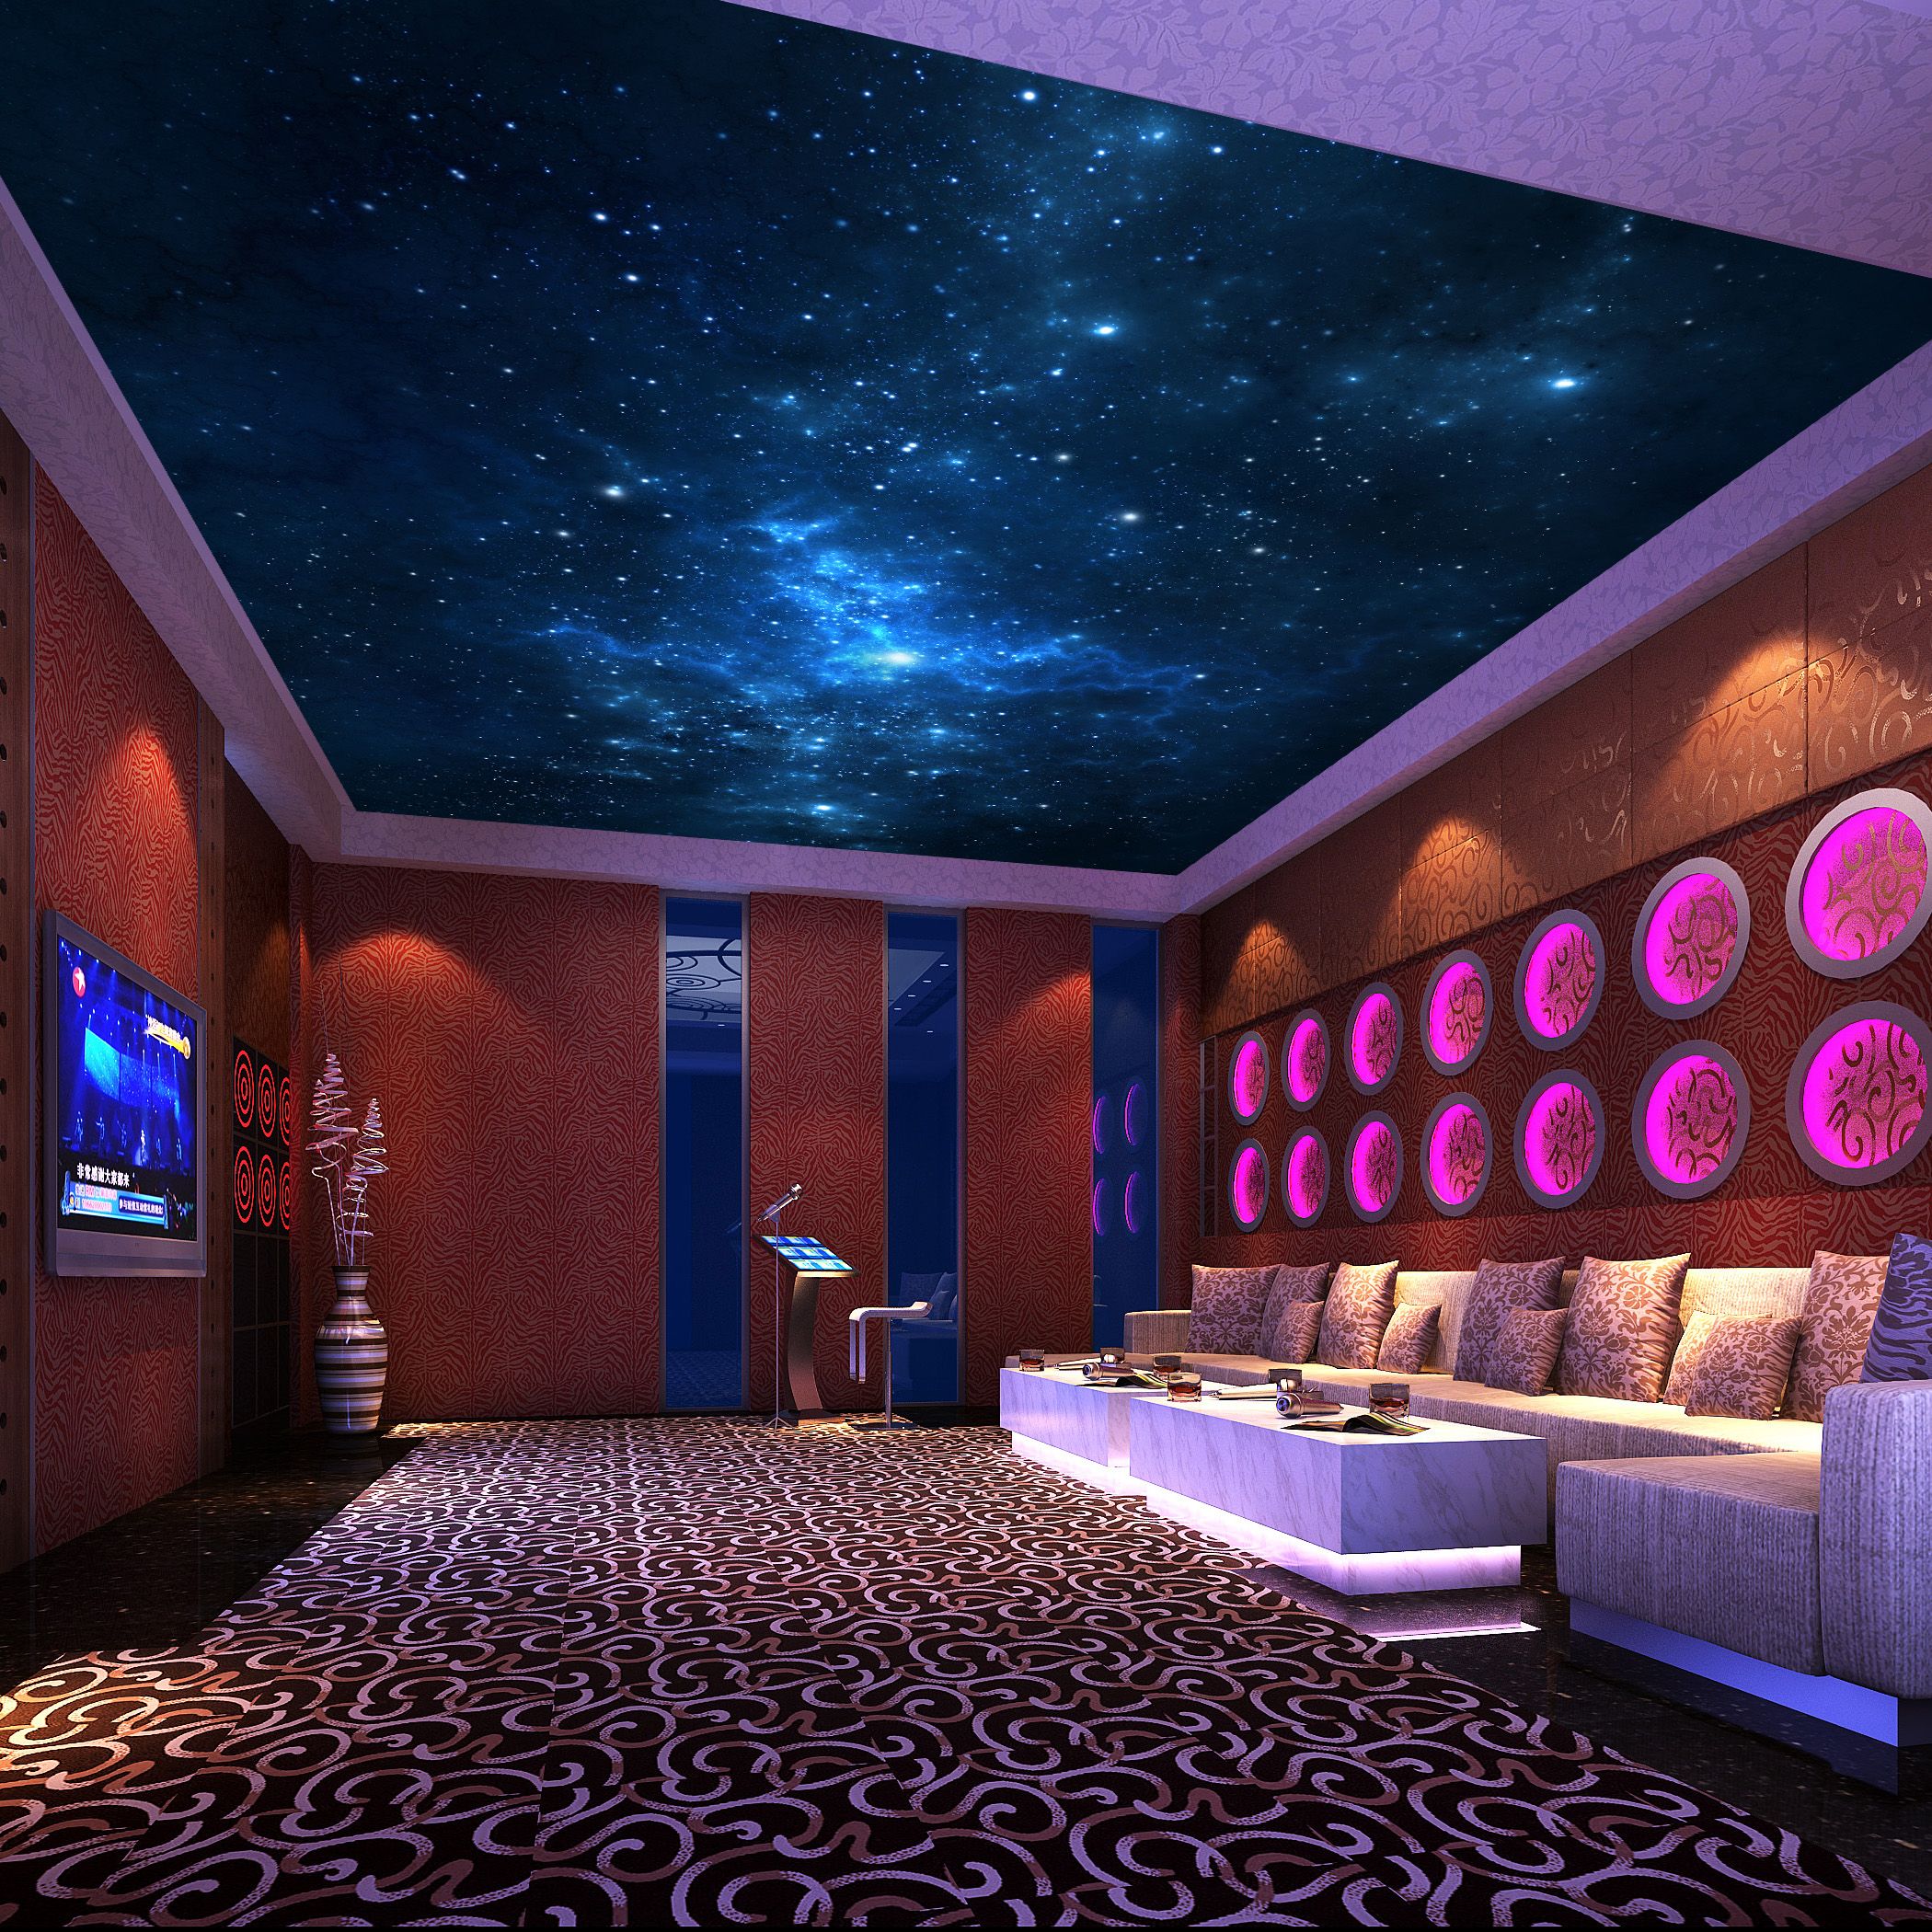 night sky ceiling wallpaper,ceiling,lighting,interior design,room,building